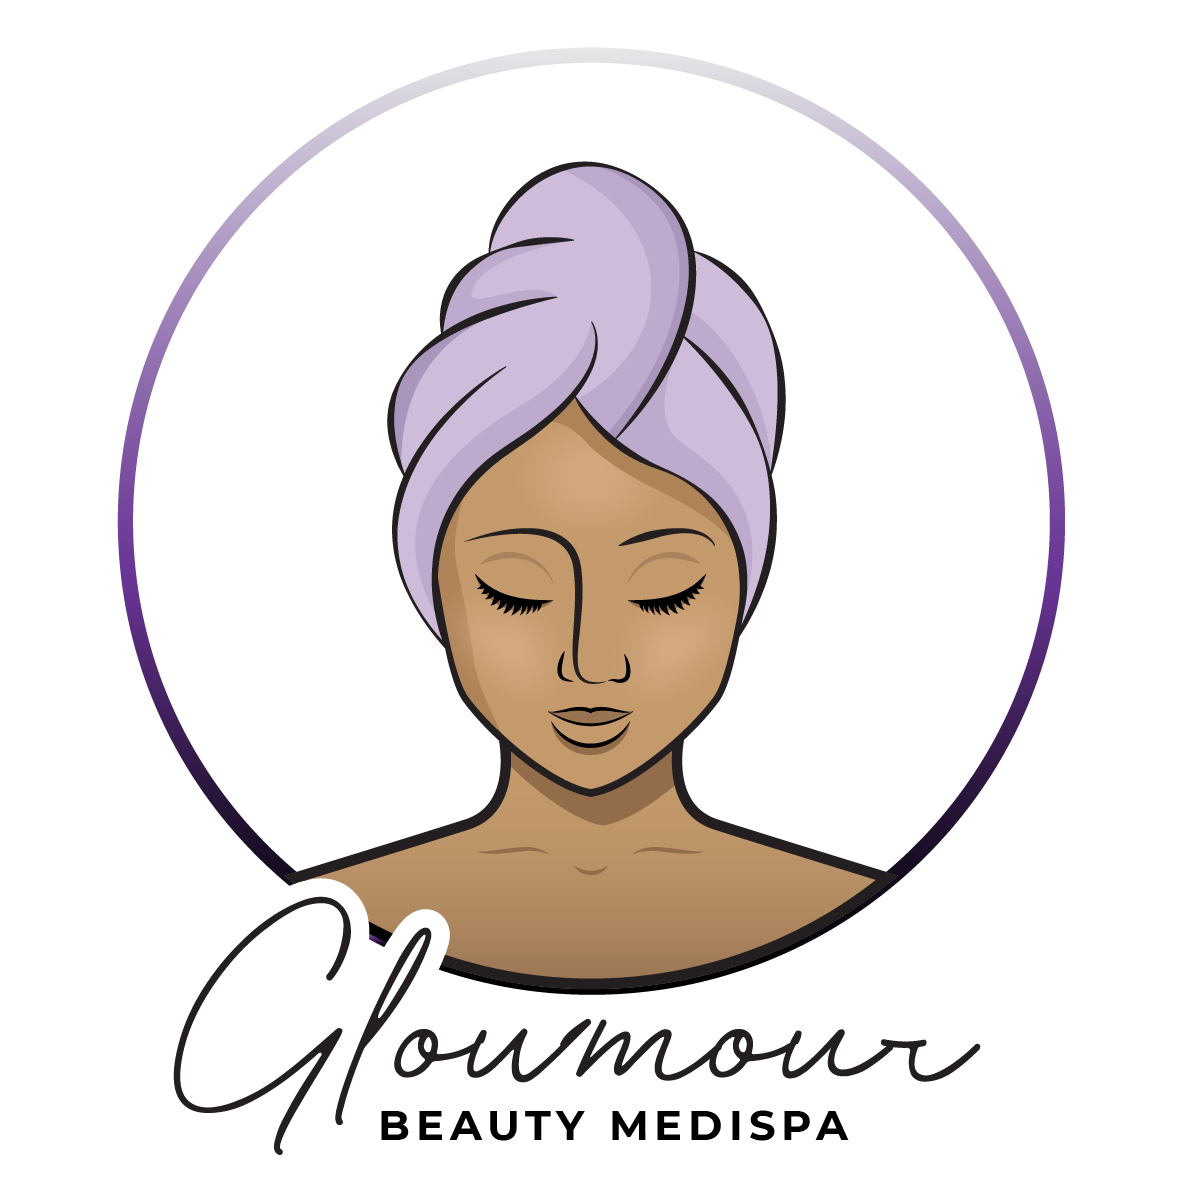 Glowmour Beauty Medispa - Tampa Premier Medispa For People of Color